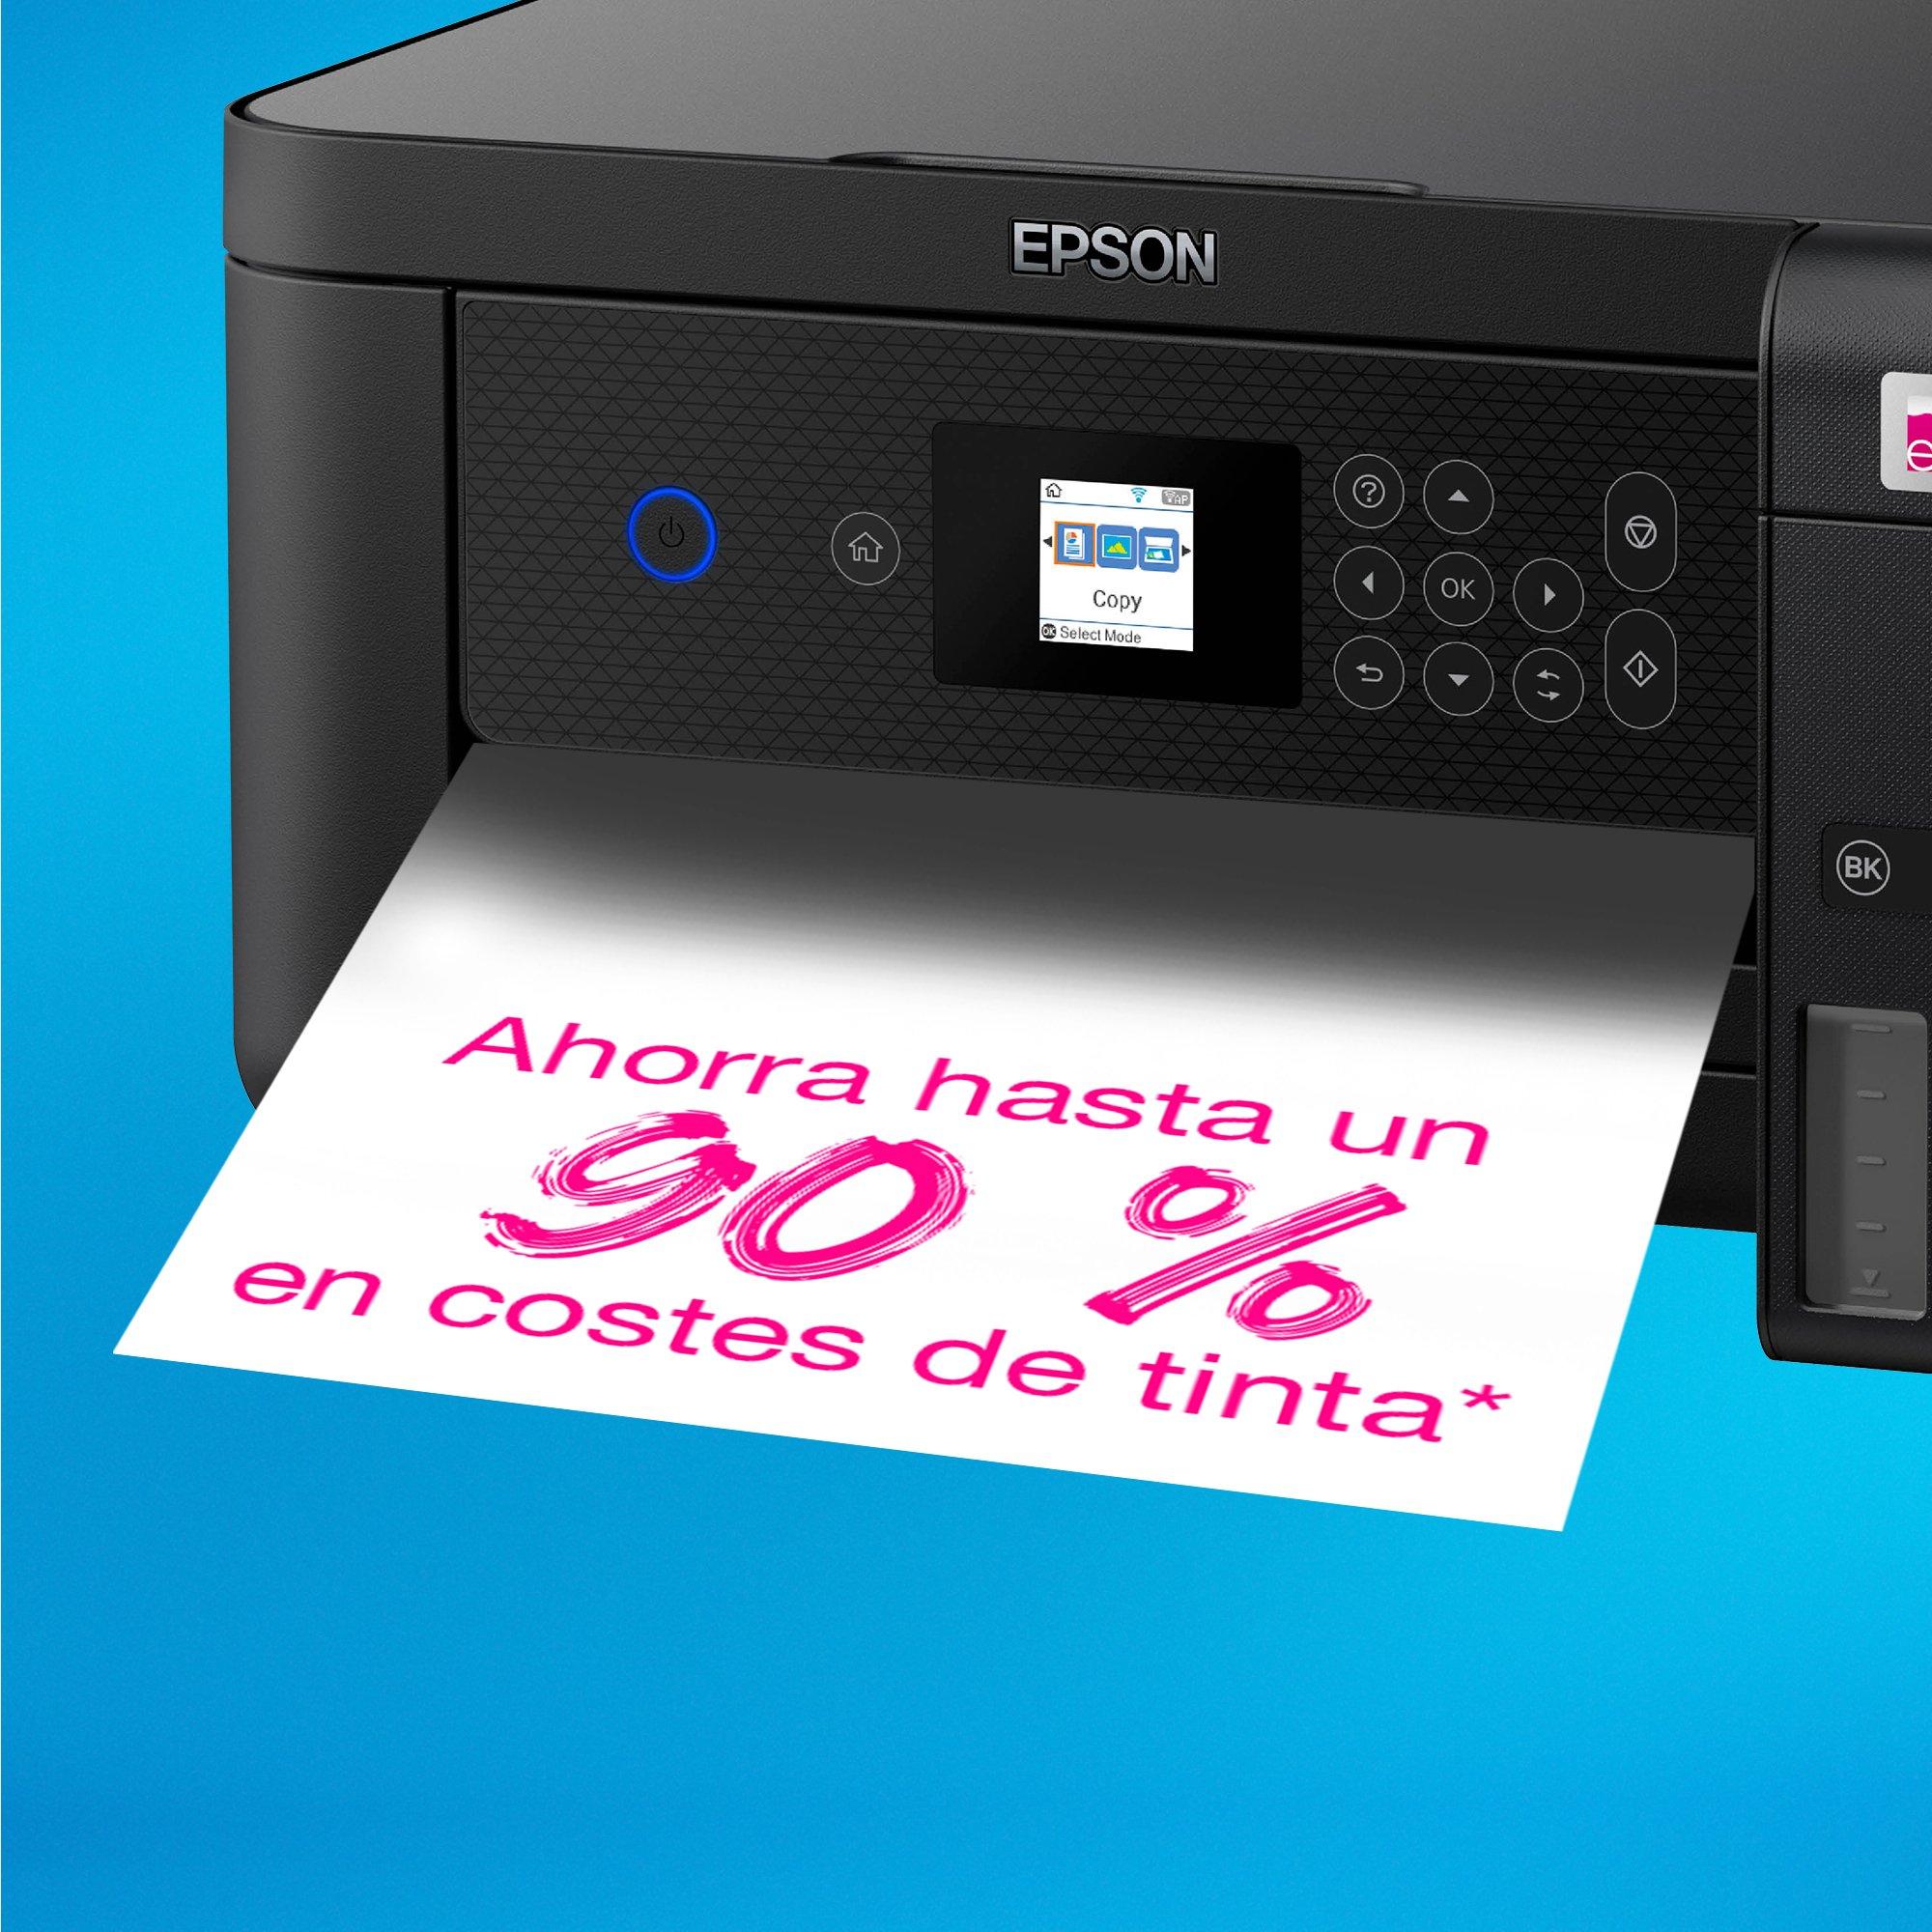 Qué impresora comprar para manualidades: Review EPSON Ecotank ET2856 